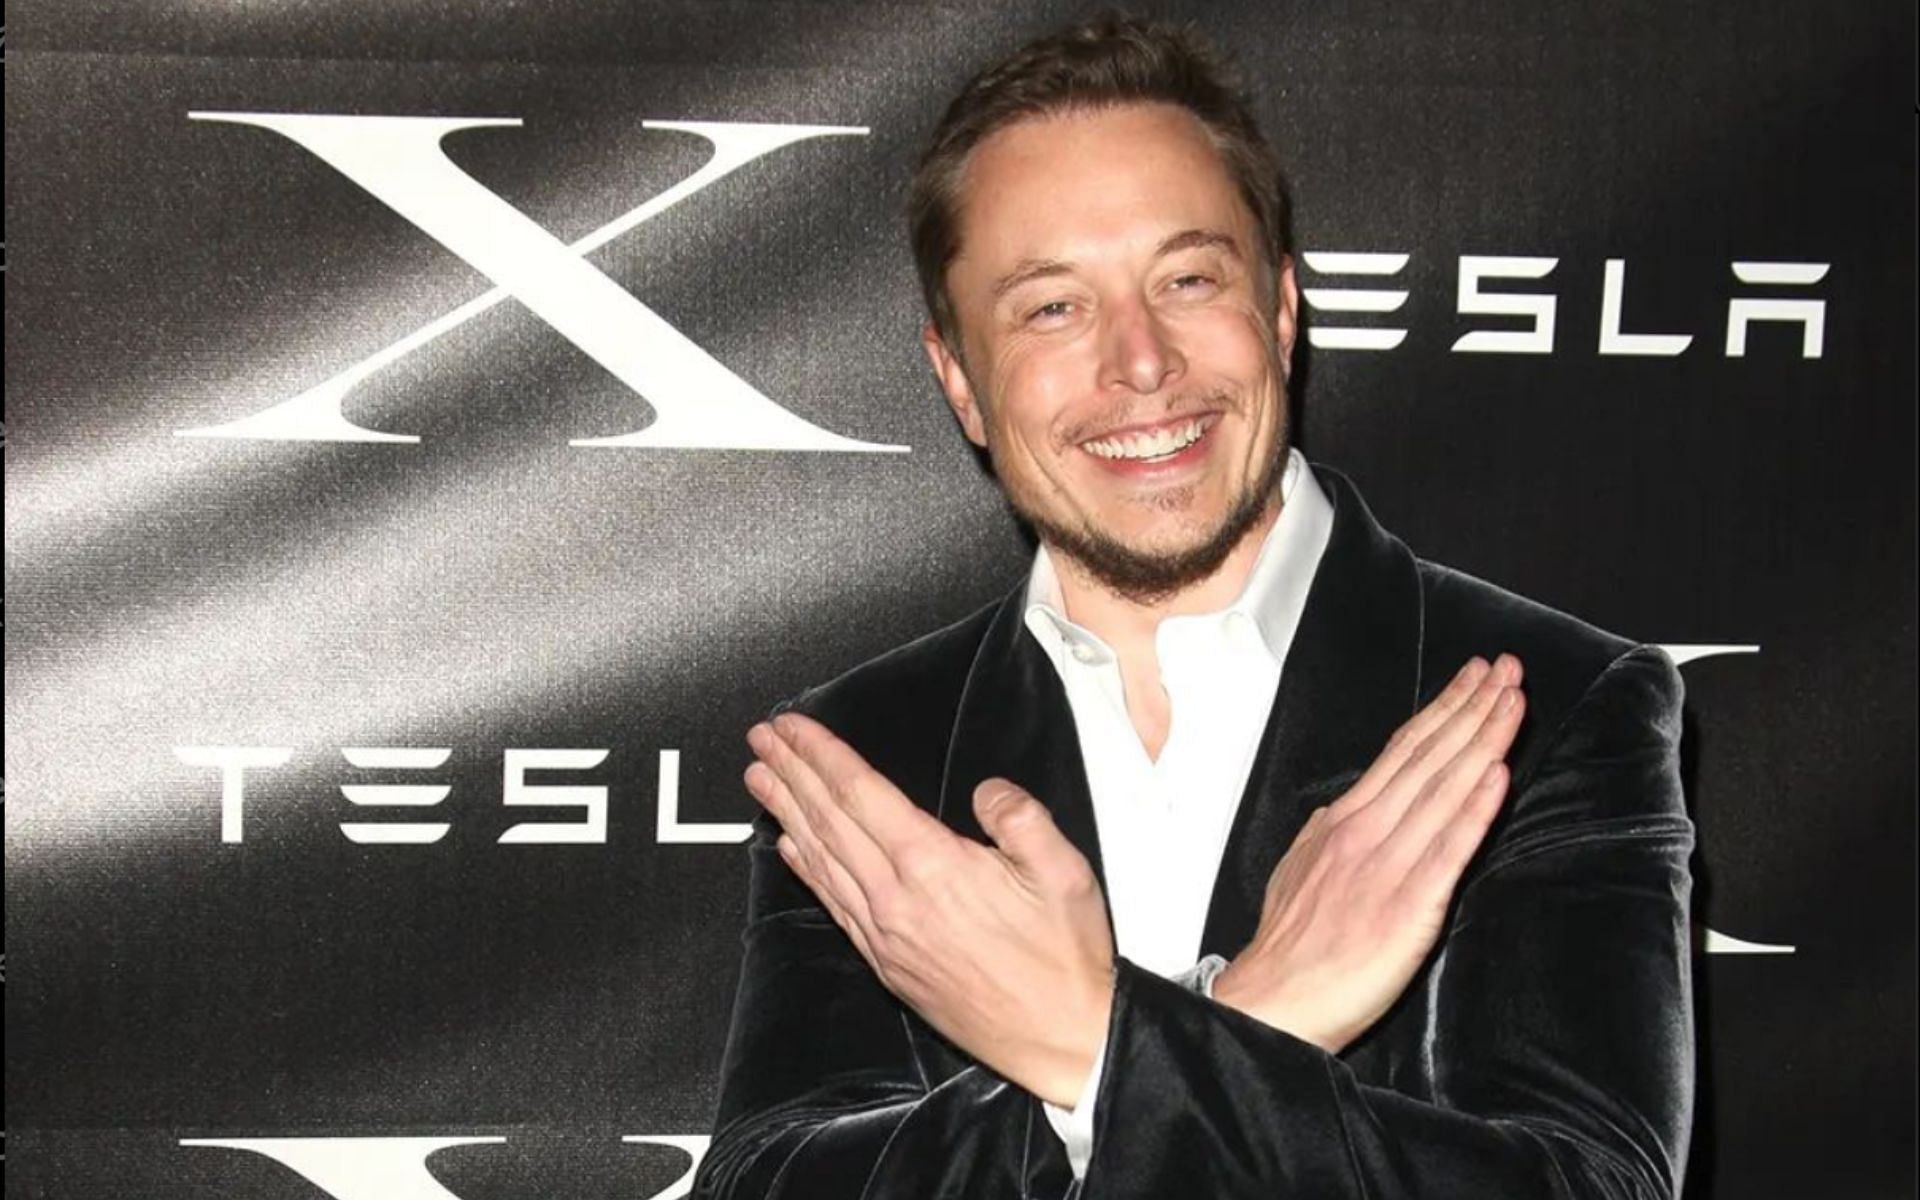 Elon Musk [Image credits: @elonmusk on Instagram]